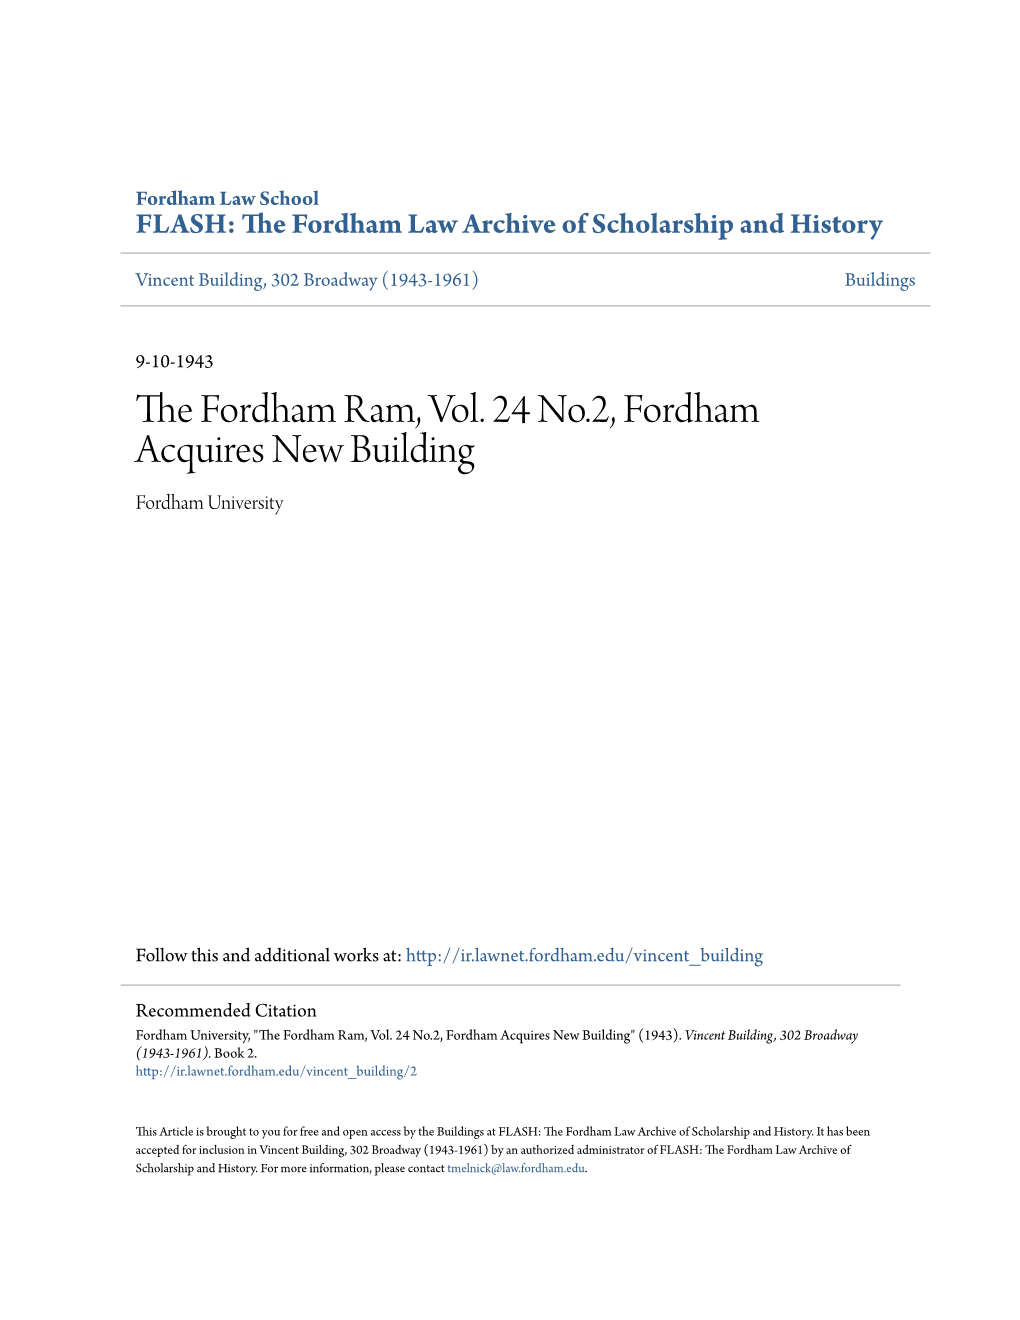 The Fordham Ram, Vol. 24 No.2, Fordham Acquires New Building